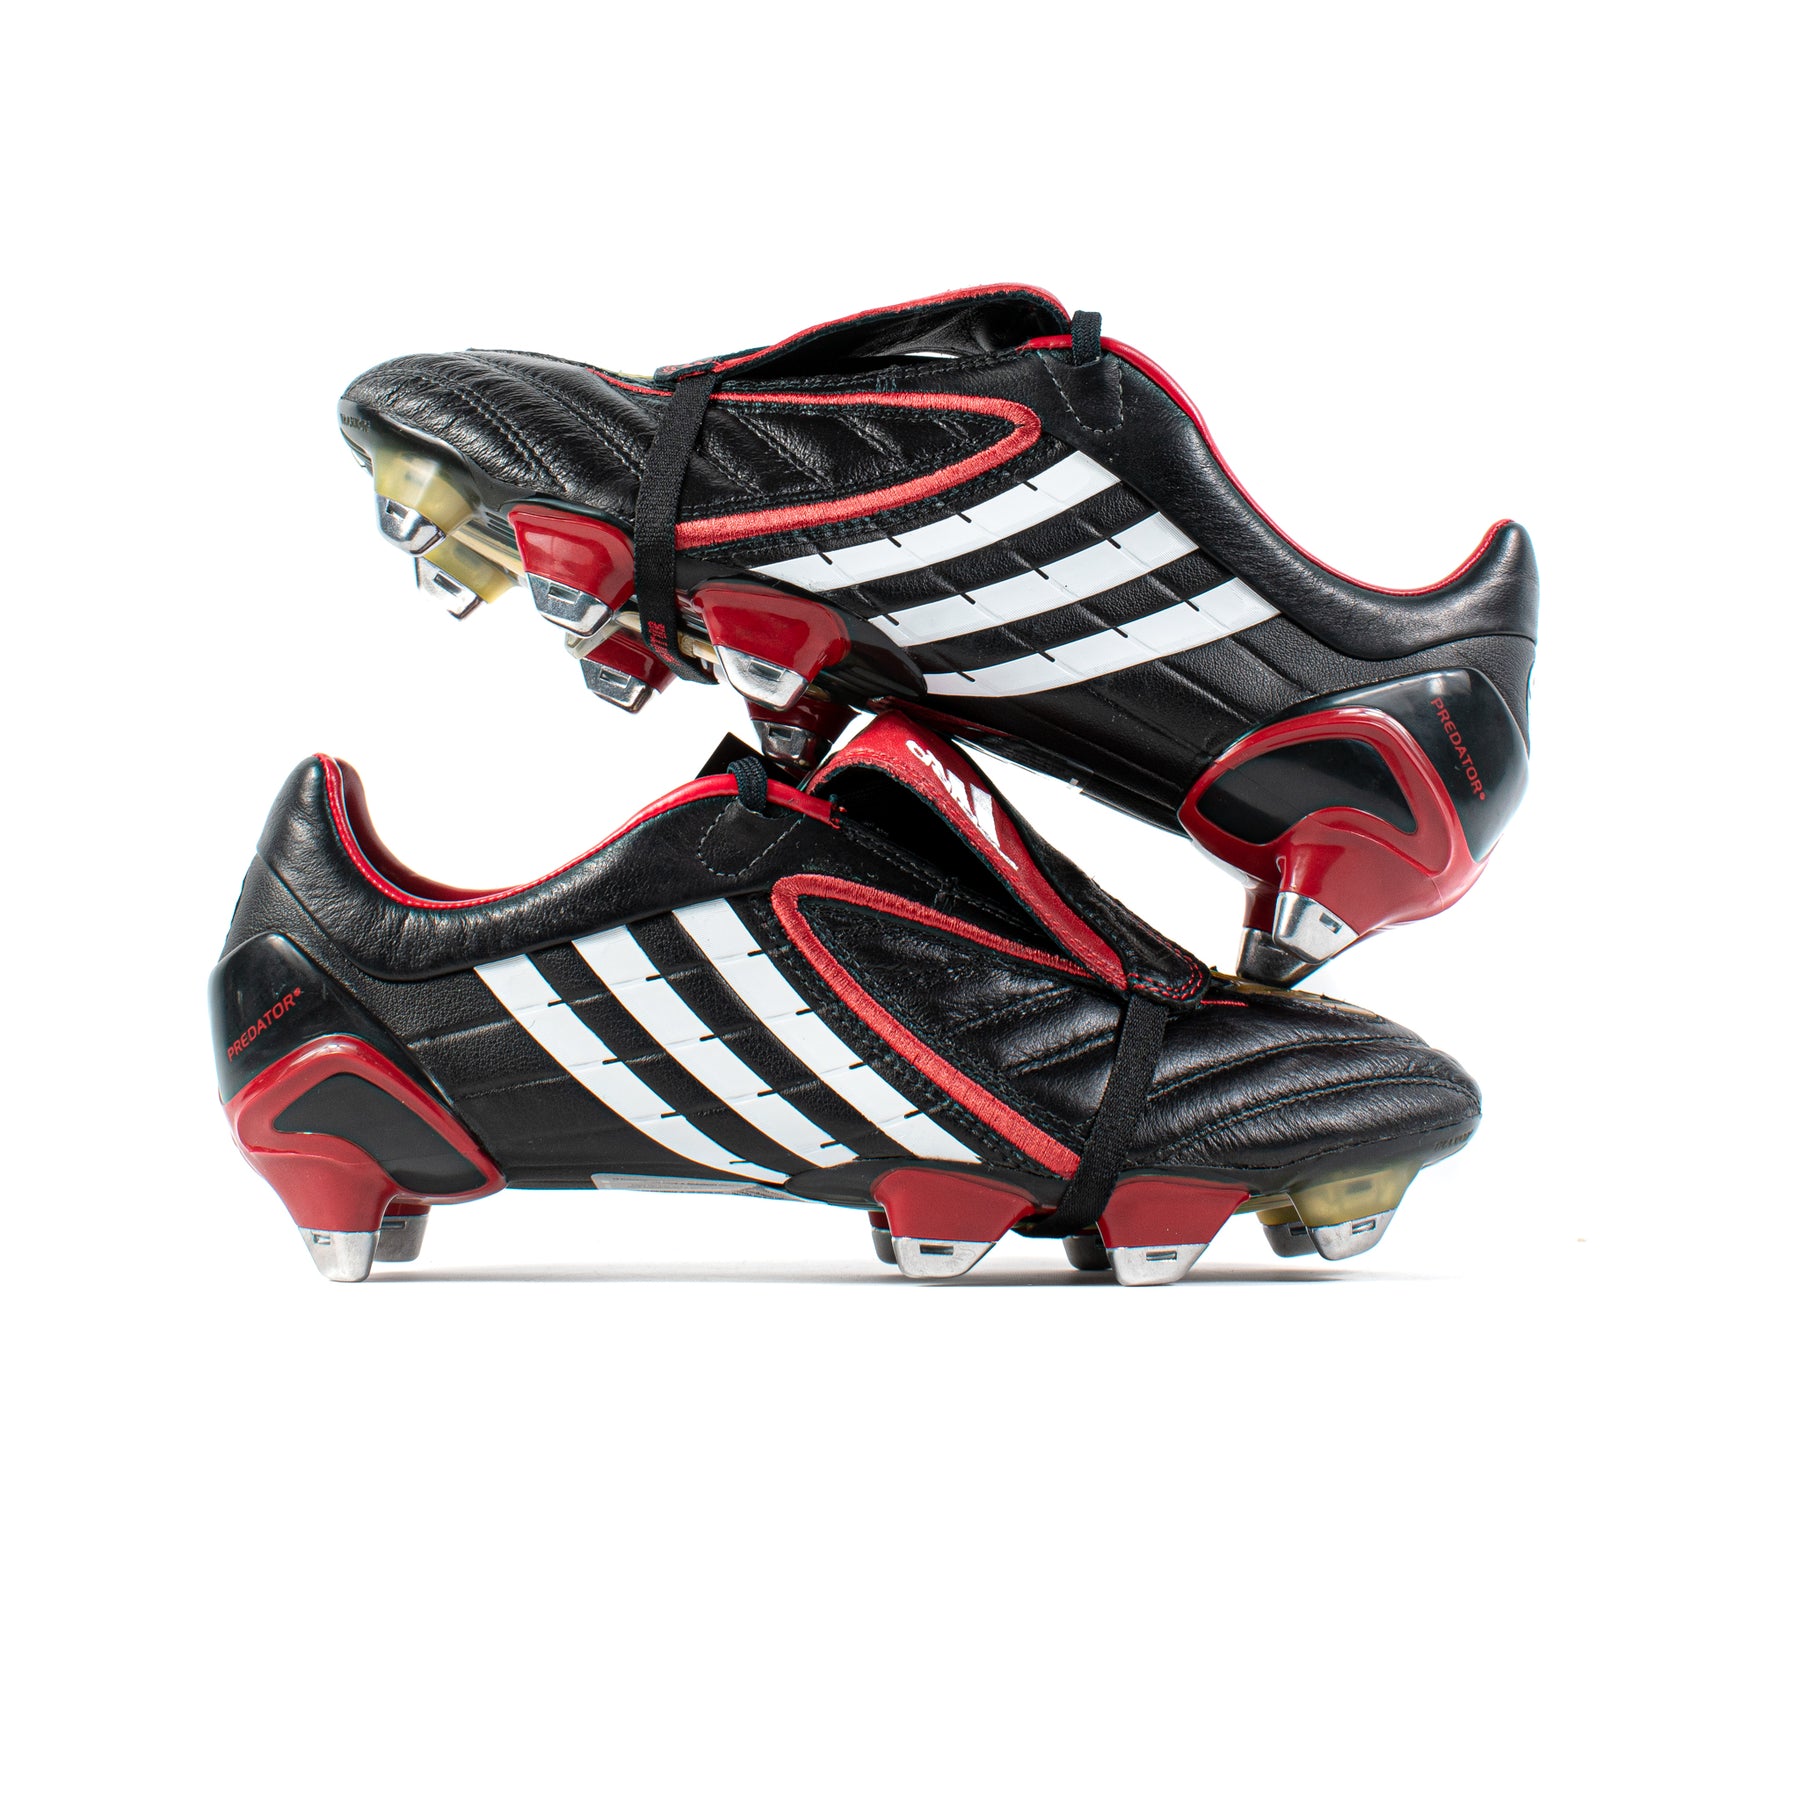 Adidas Predator Classic Black Red SG – Soccer